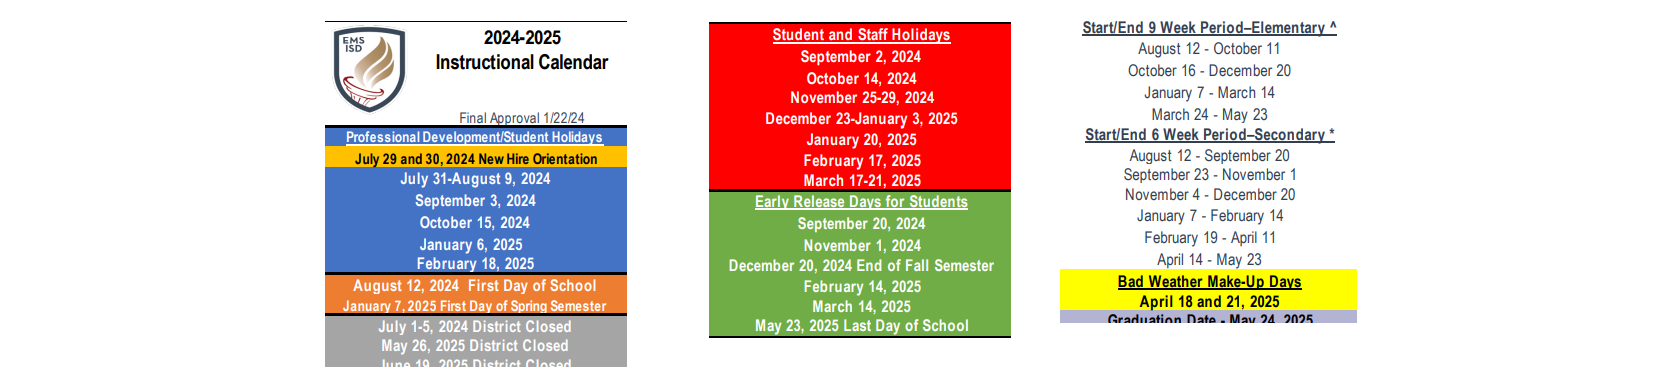 District School Academic Calendar Key for Watson Learning Center